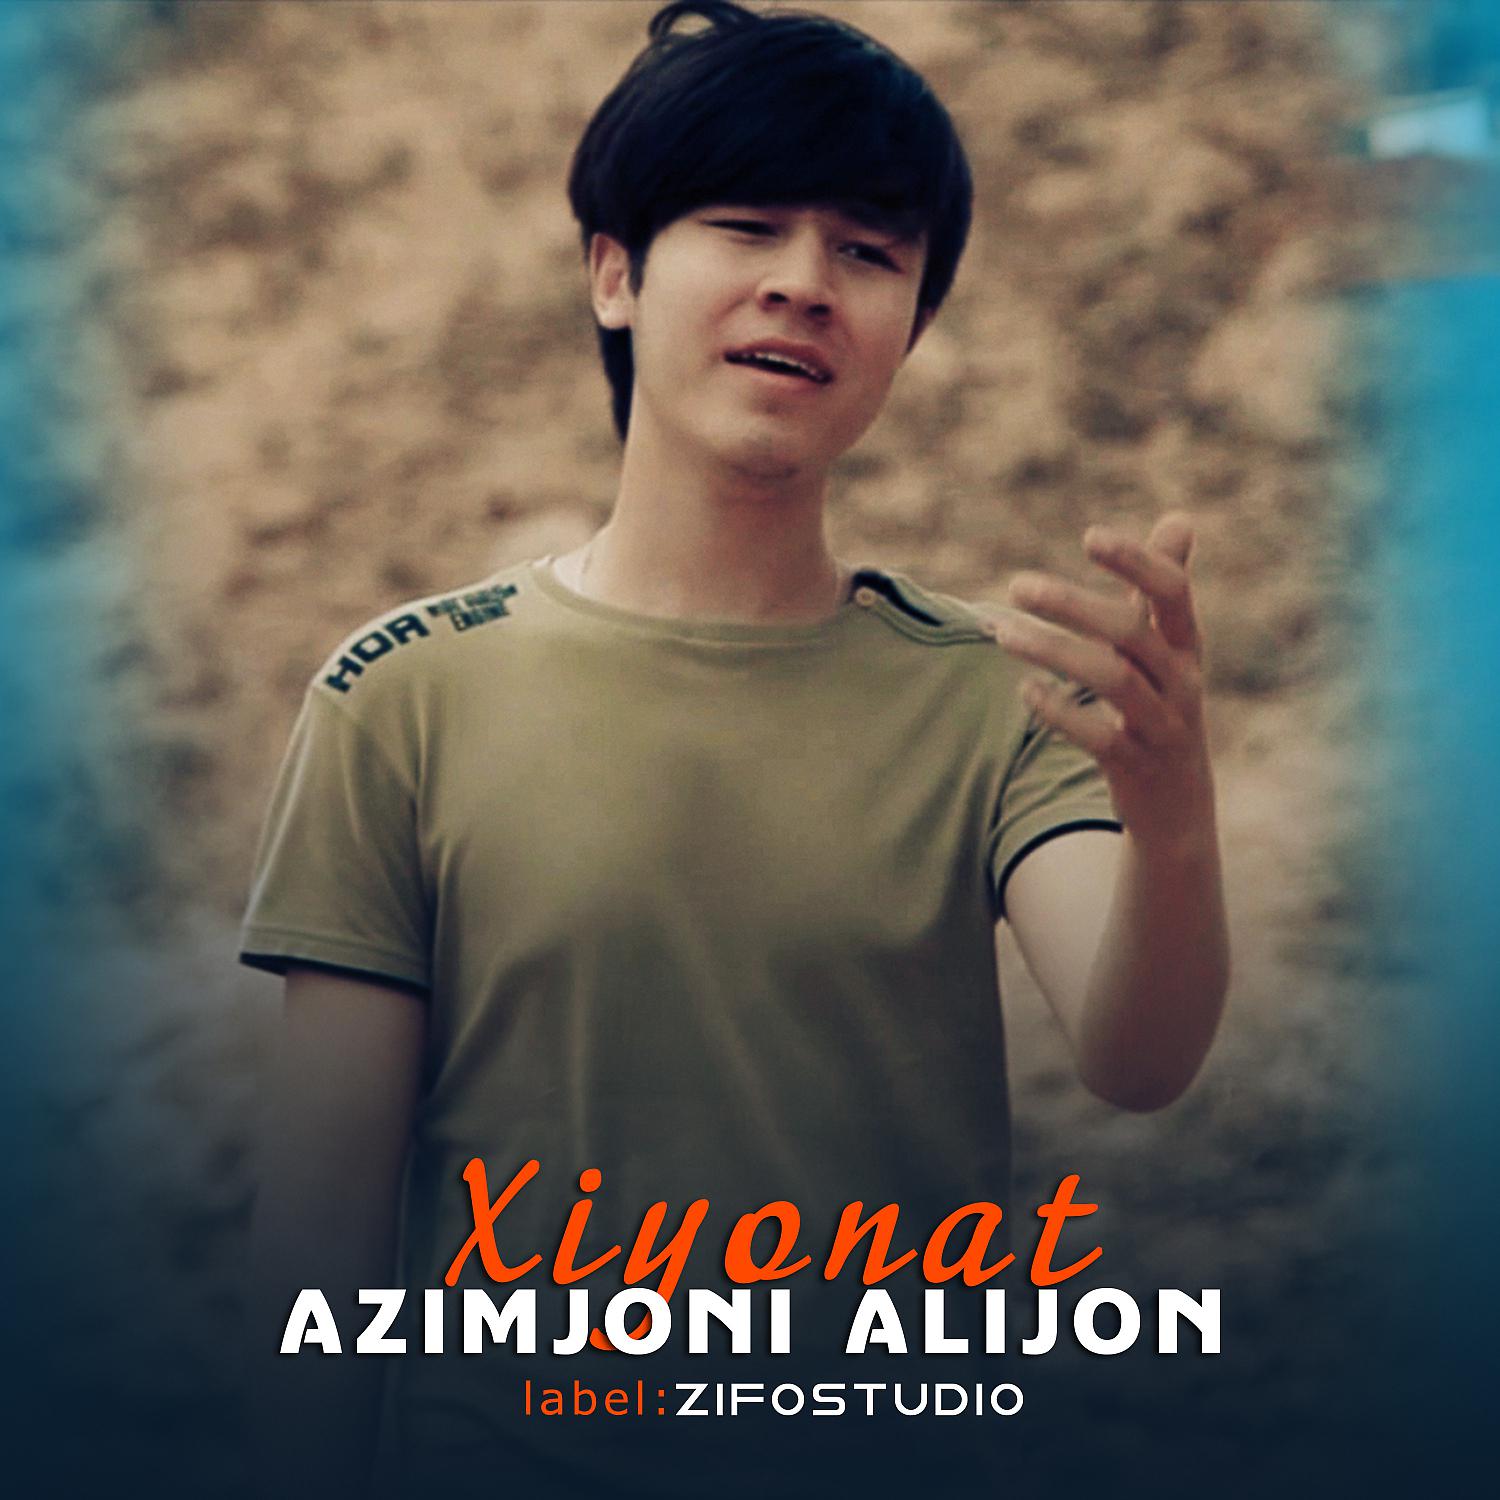 Постер альбома Khiyonat